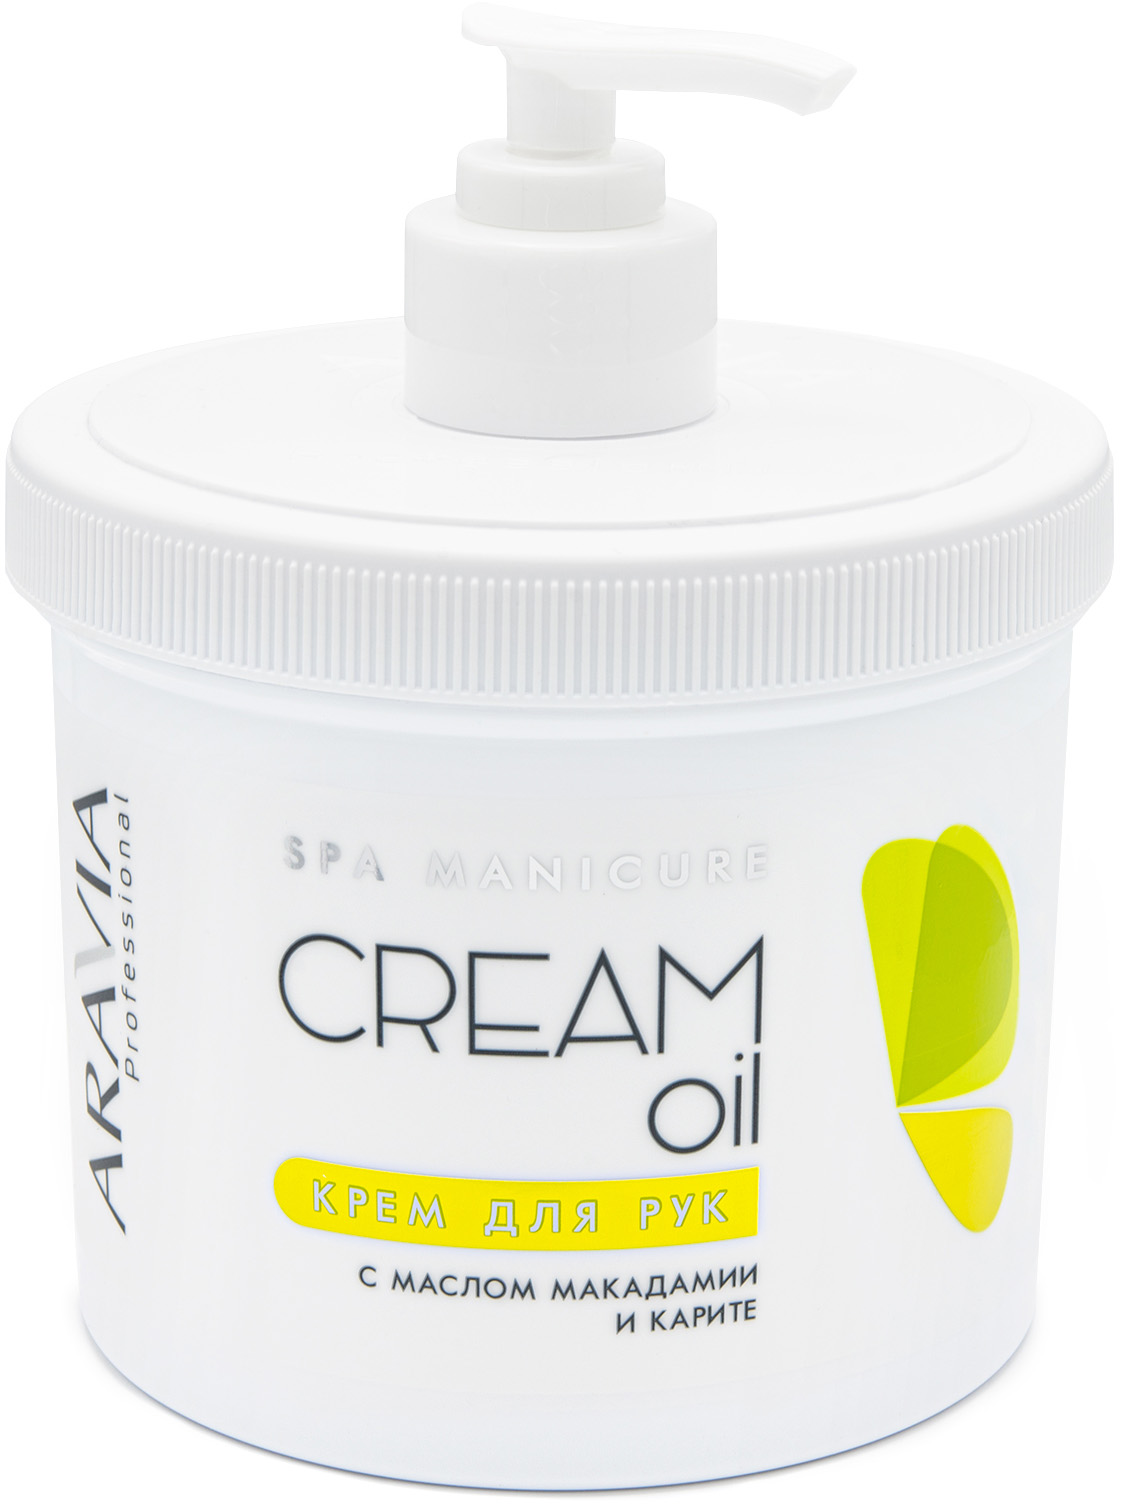 Aravia Professional Крем для рук Cream Oil с маслом макадами